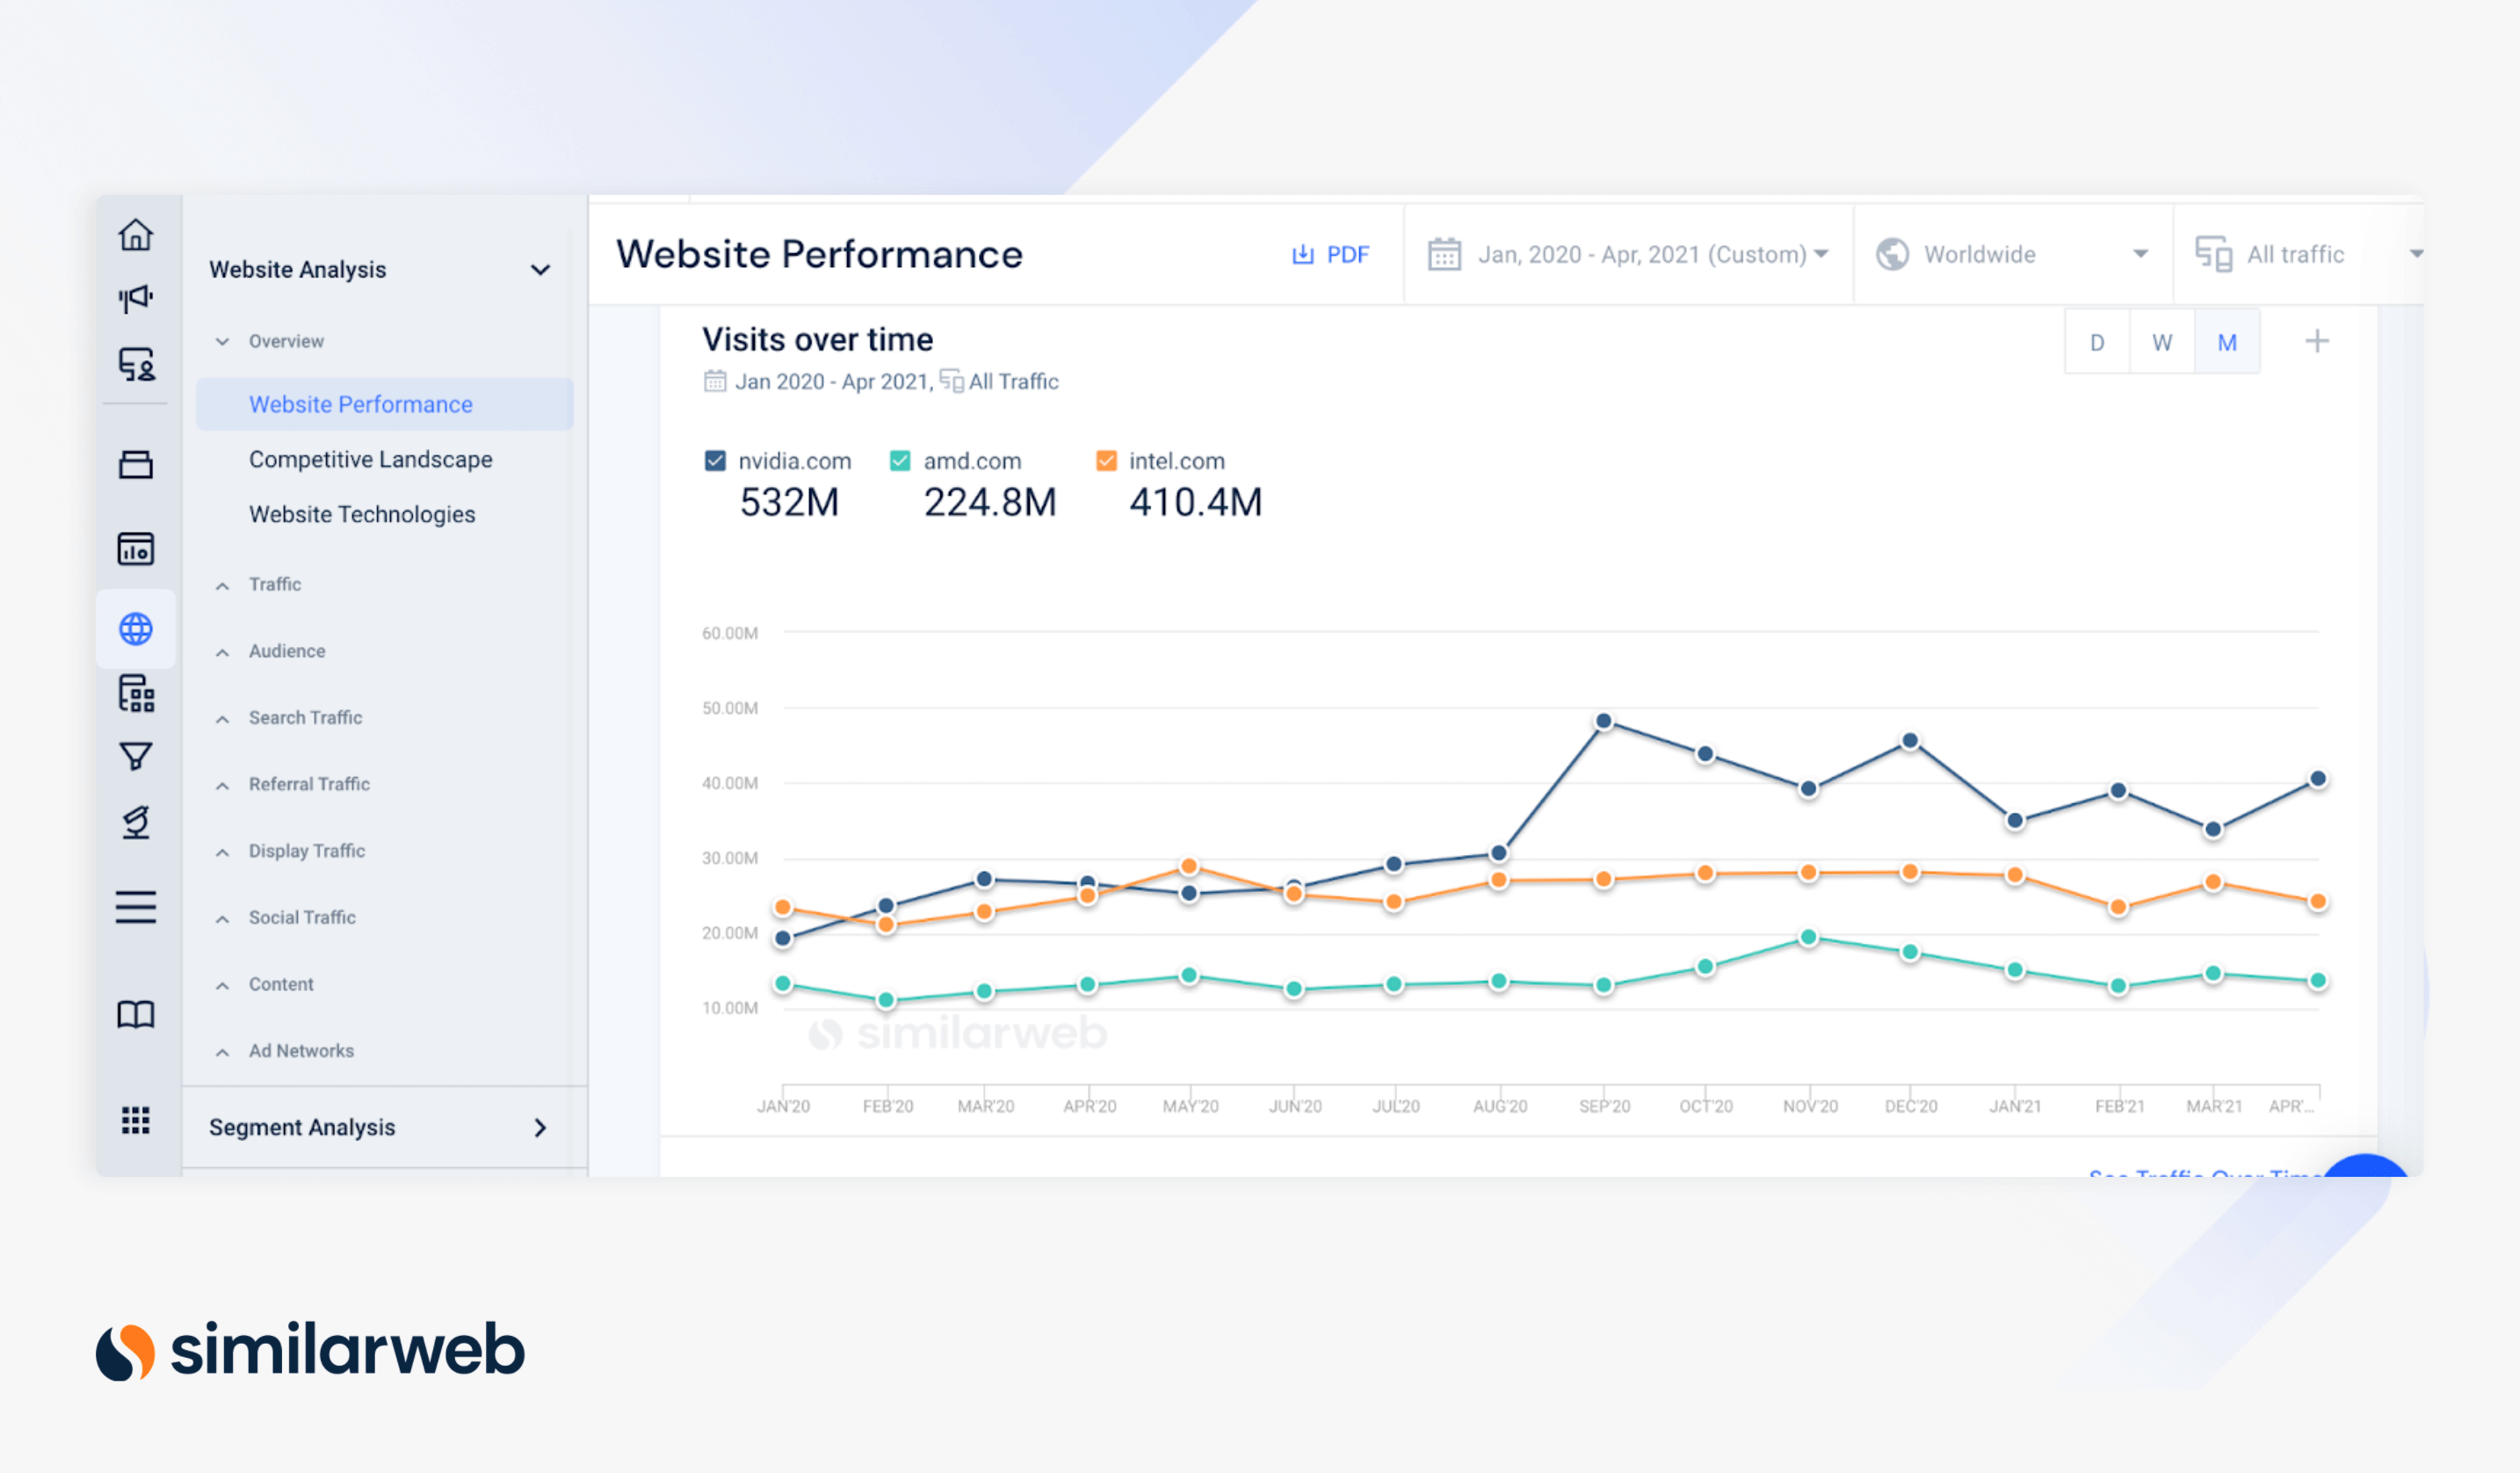 Website performance - visits over time